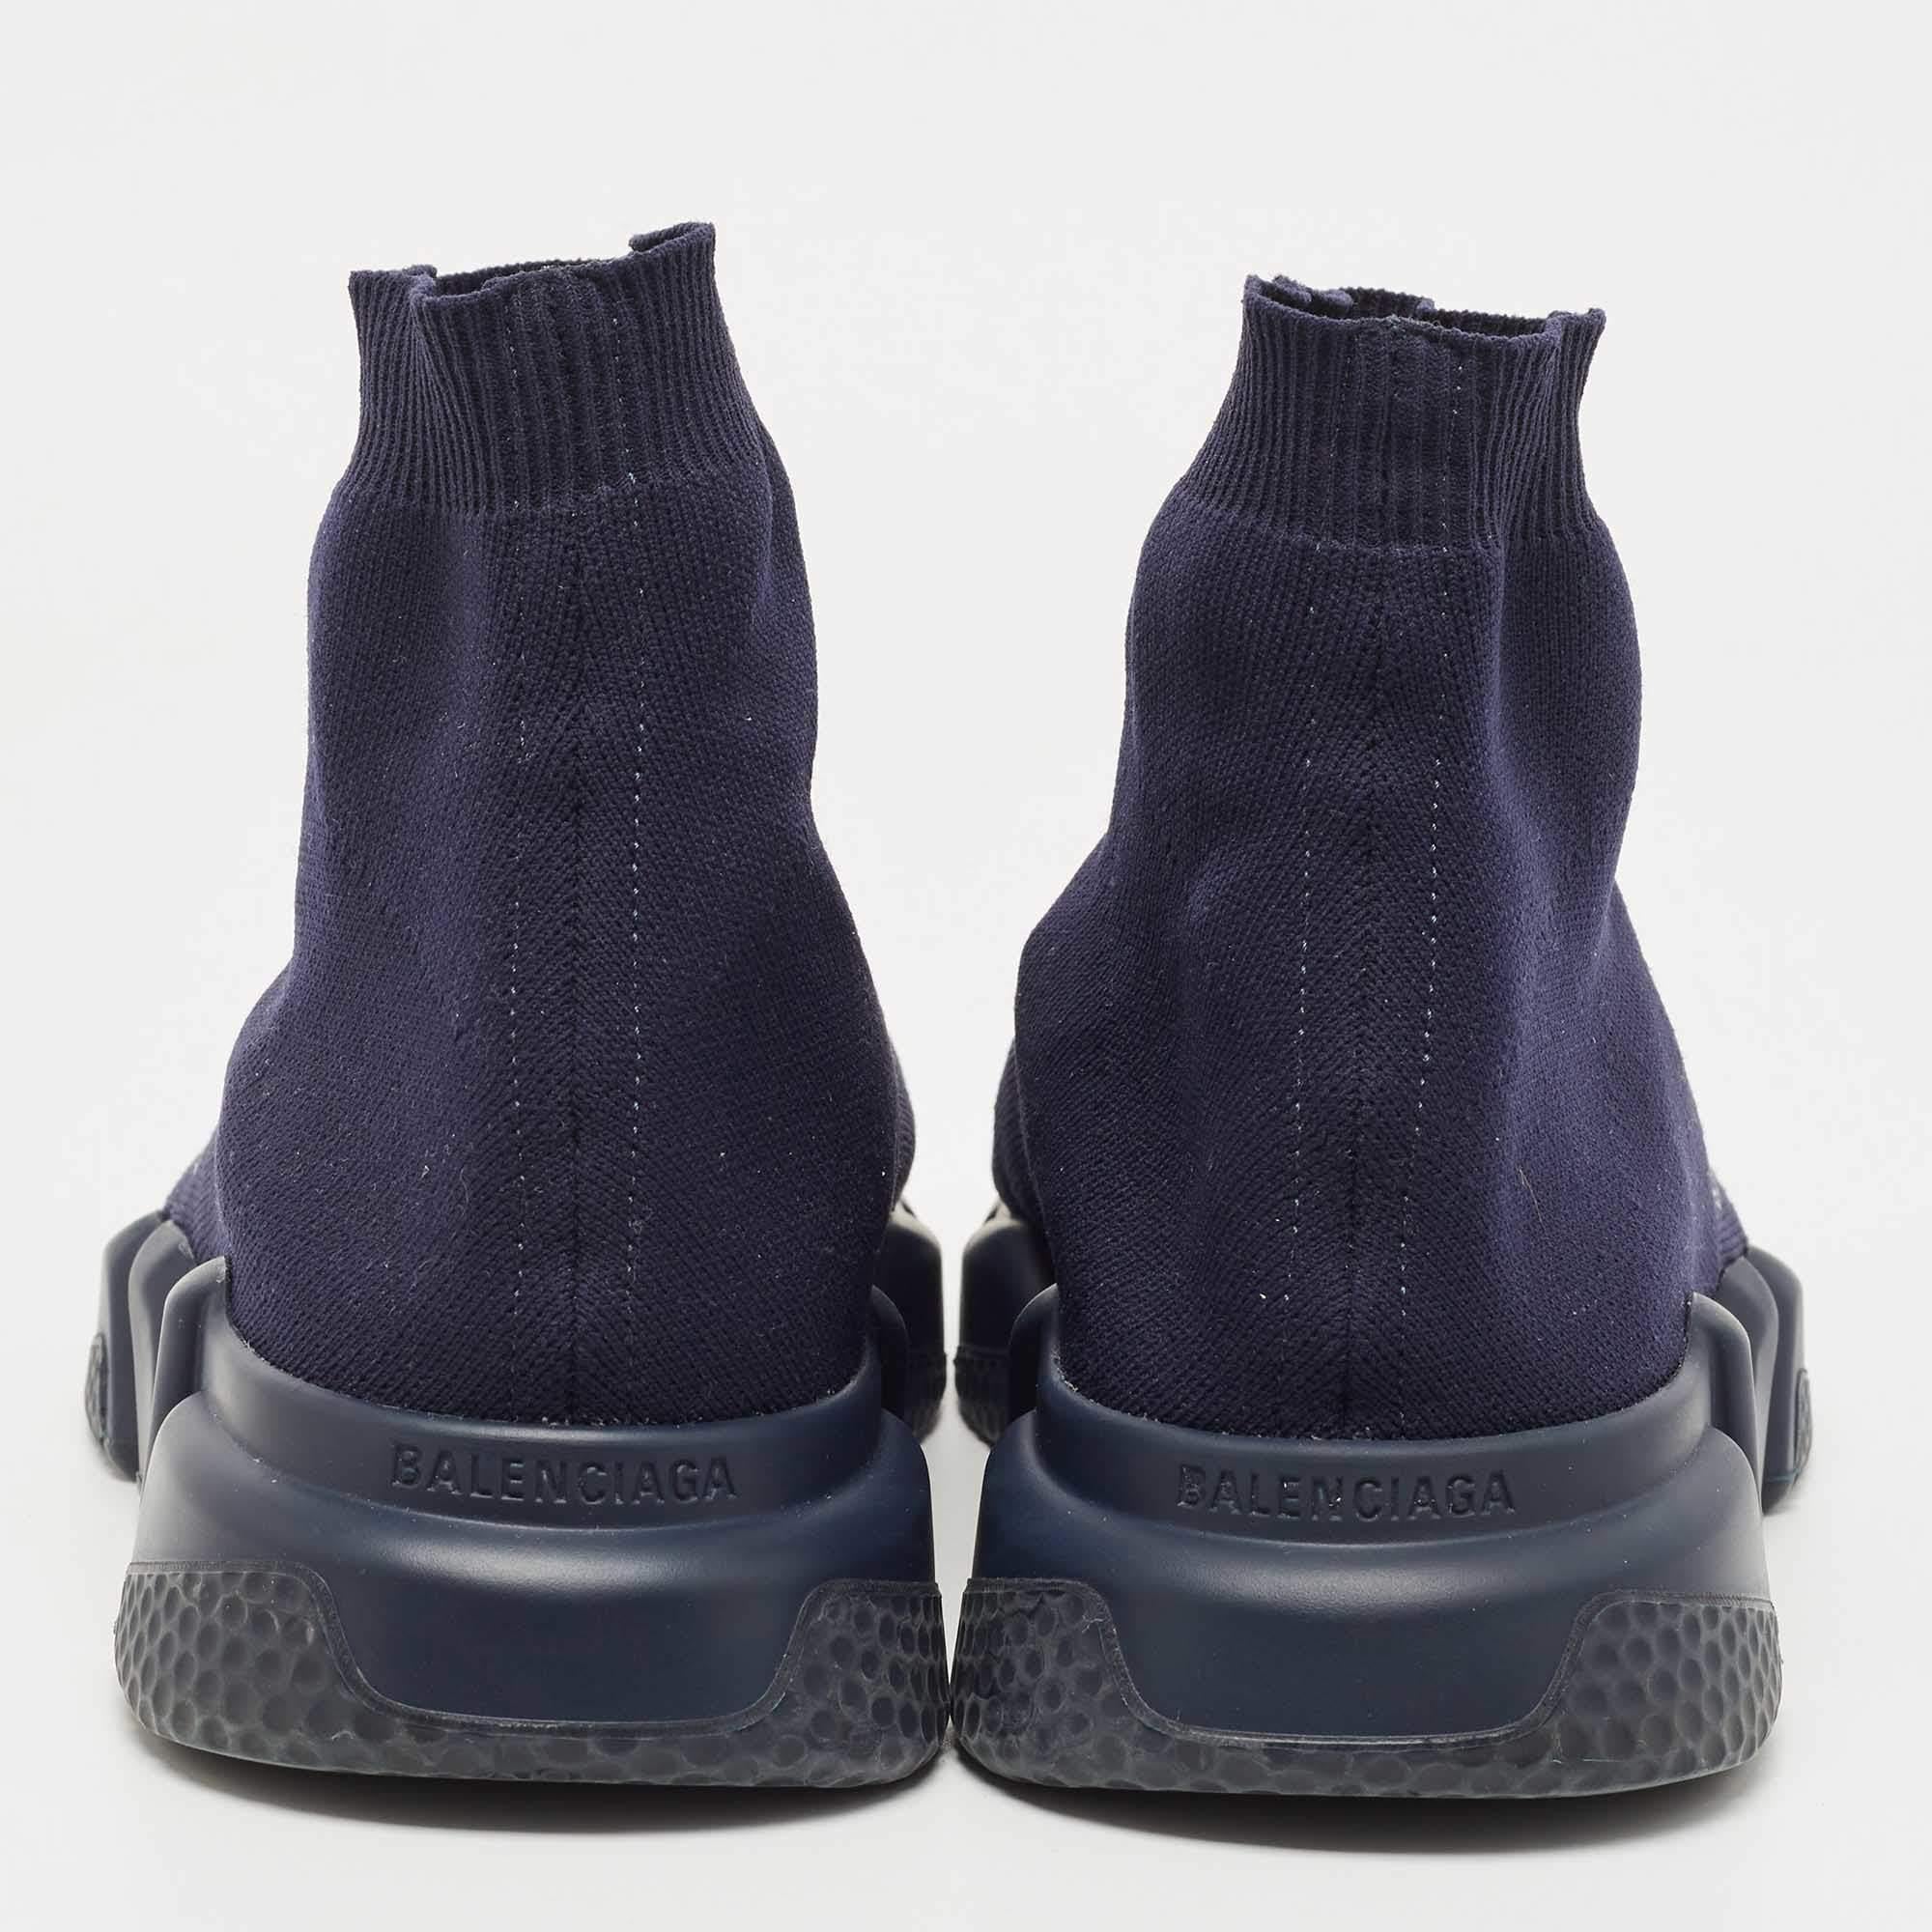 Balanciaga Navy Blue Knit Fabric High Top Sneakers Size 43 1